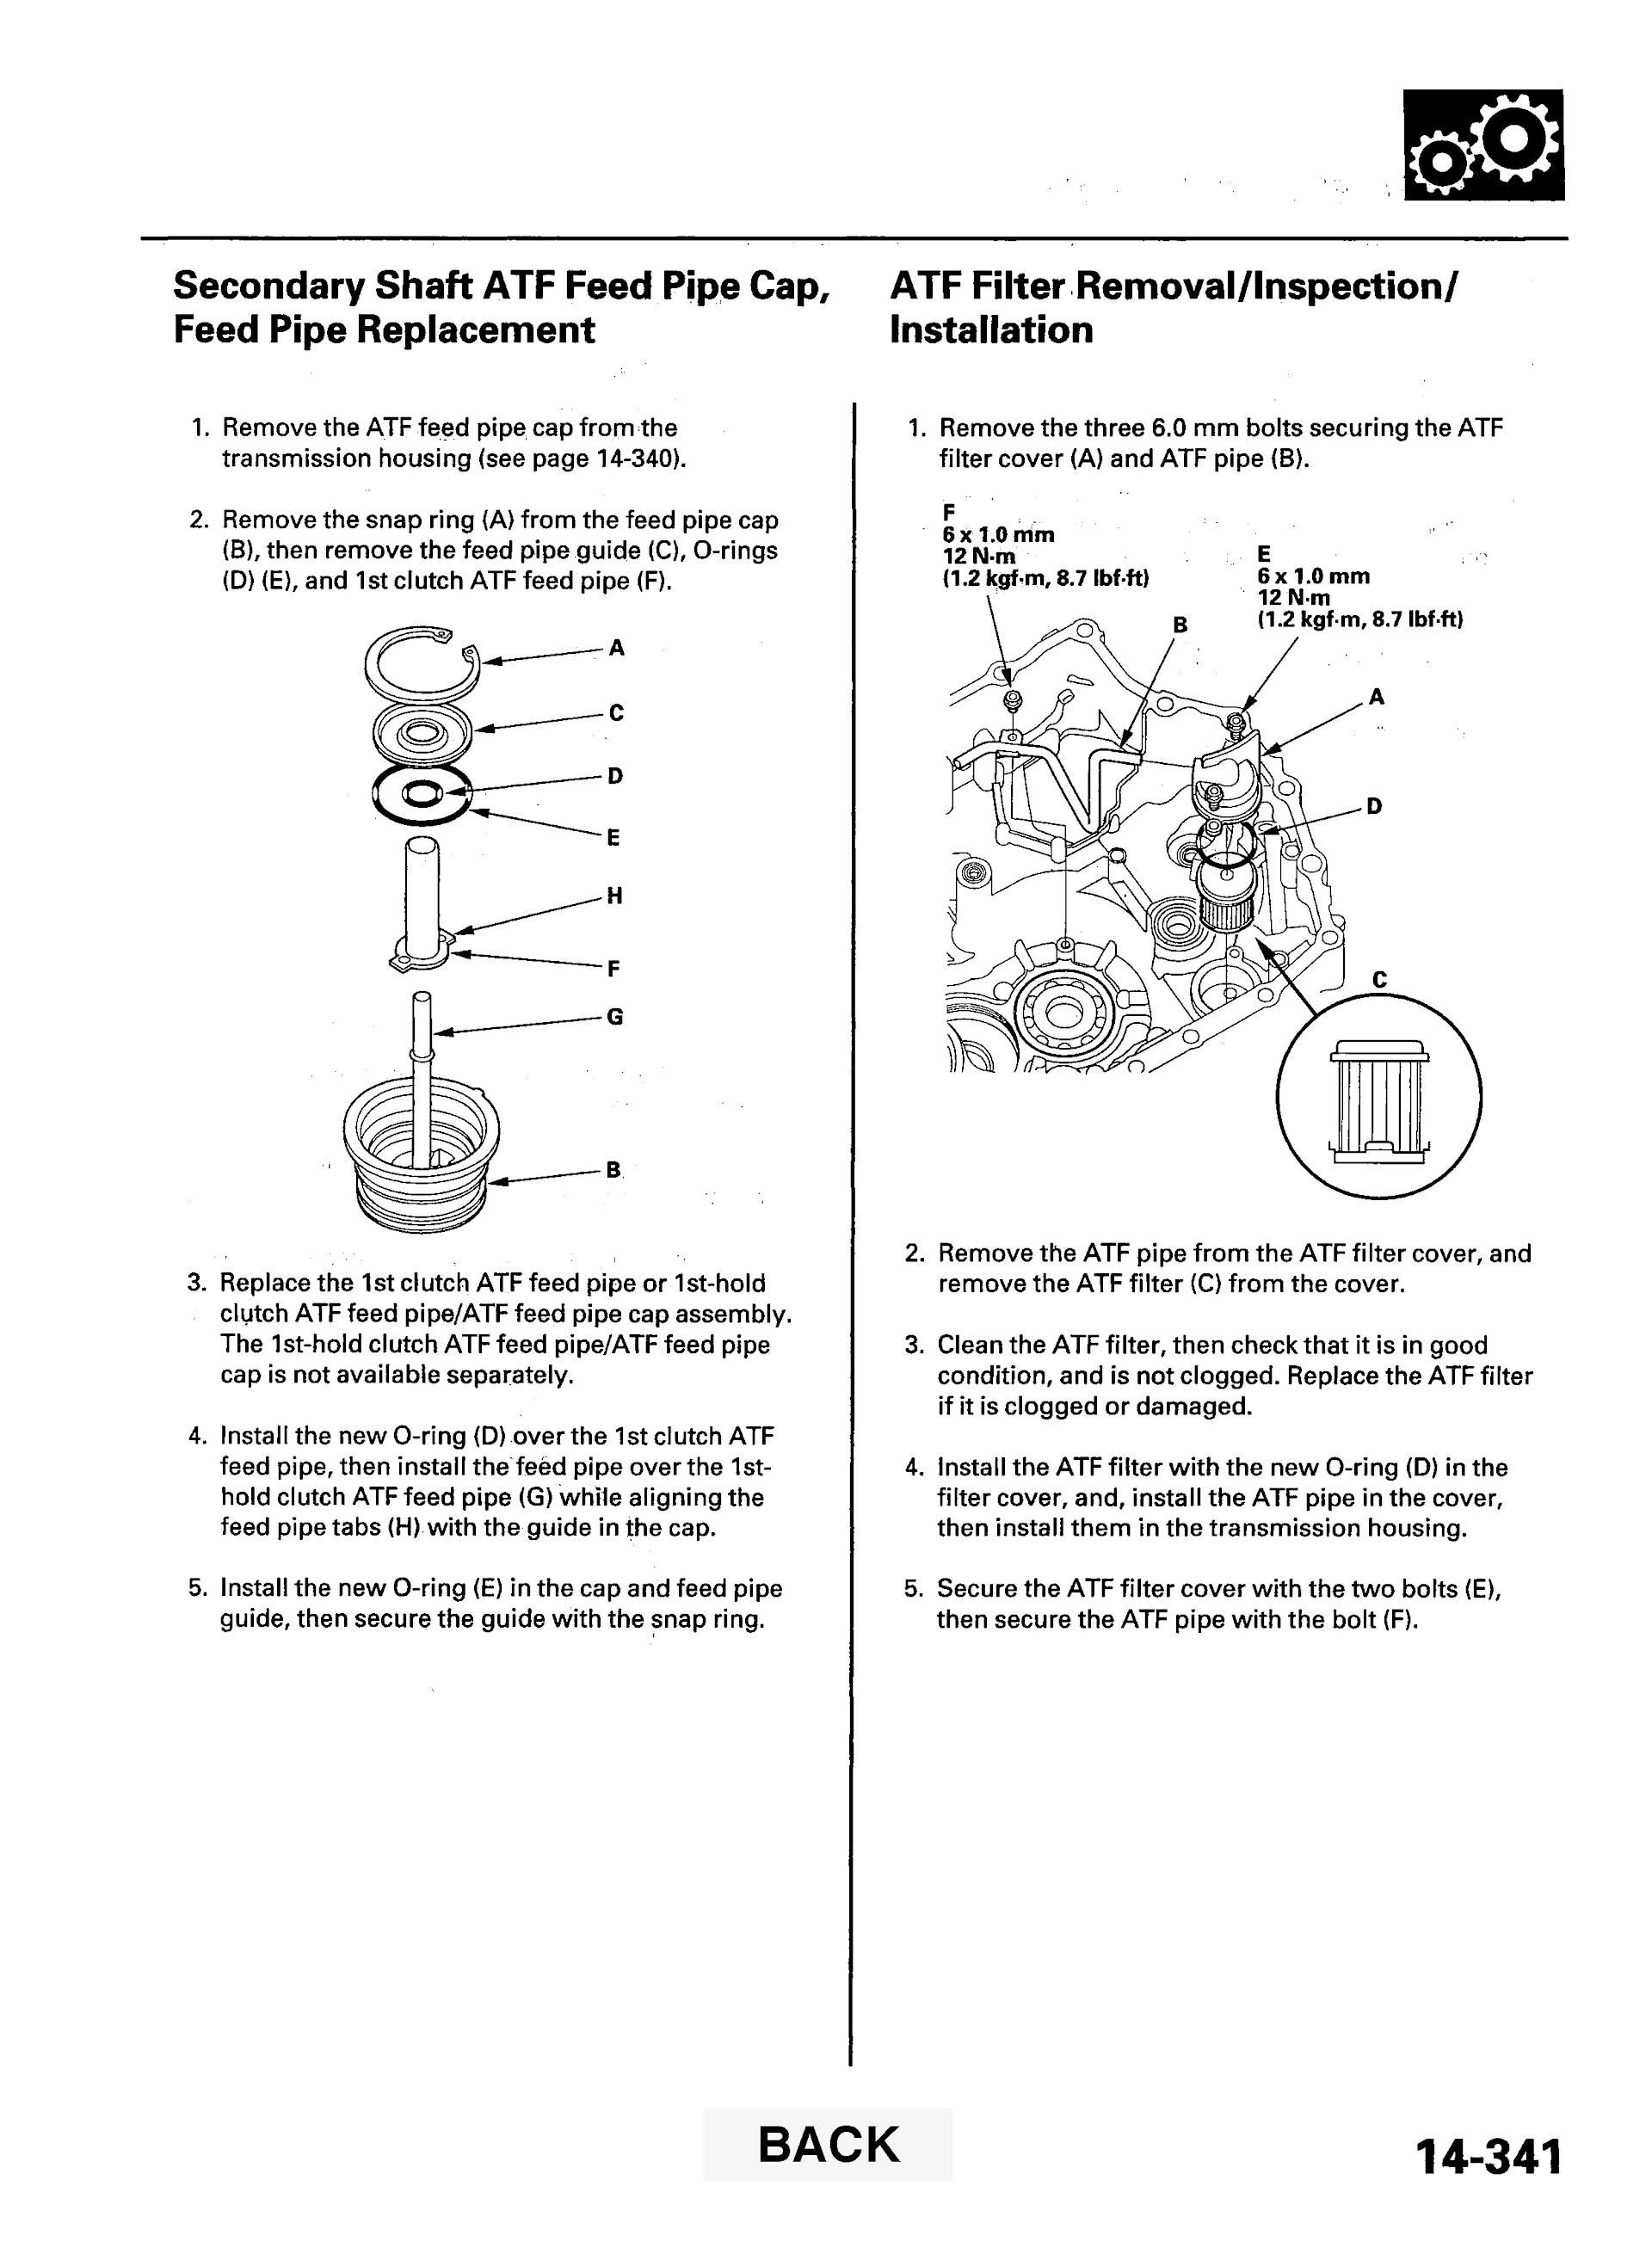 2007 Acura MDX Repair Manual, Feed Pipe Replacement